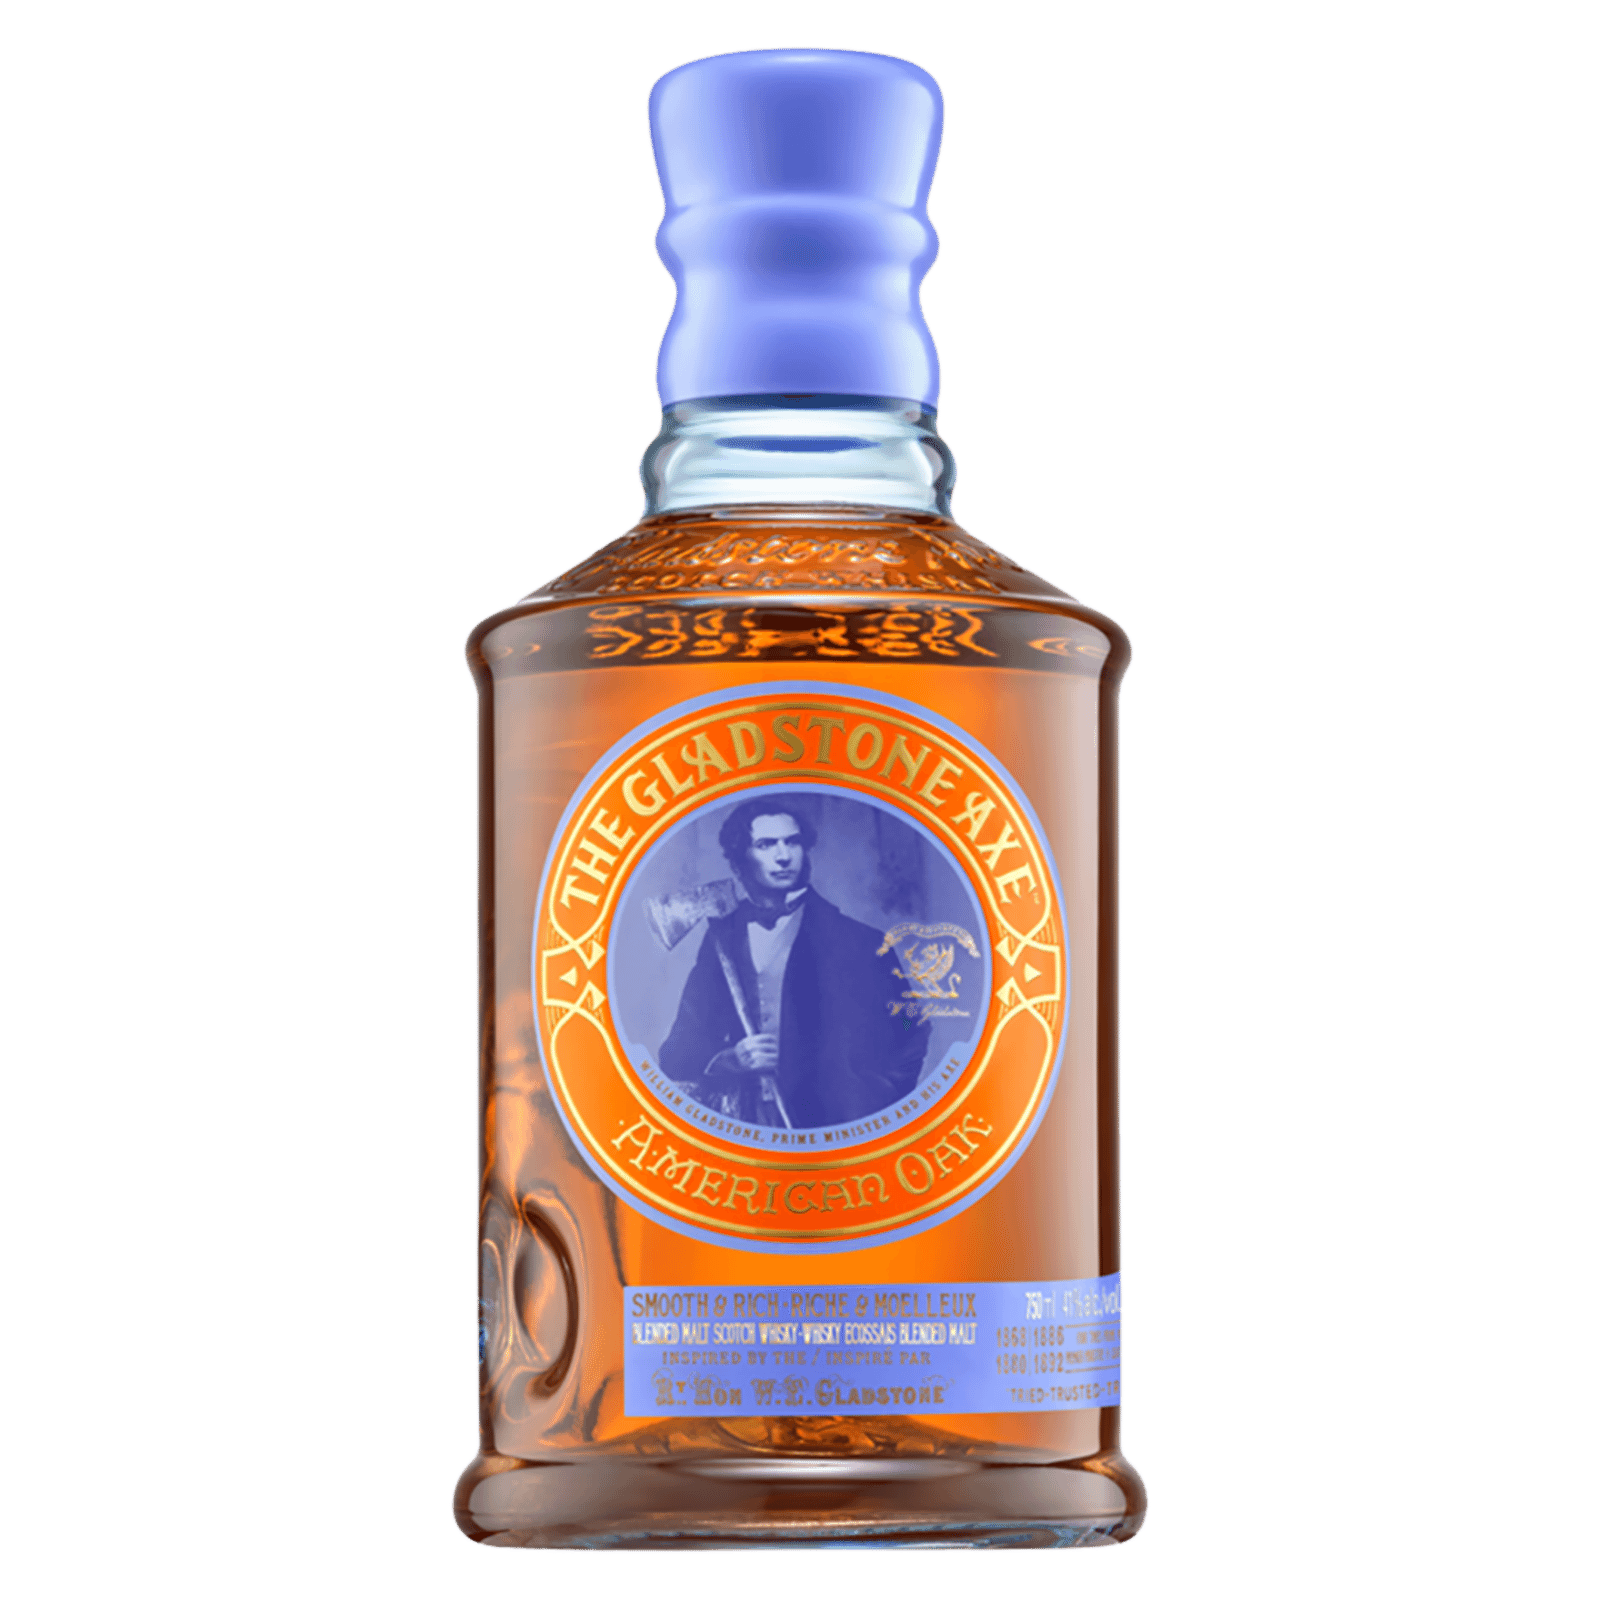 Віскі The Gladstone Axe Malt Scotch American Oak - 1